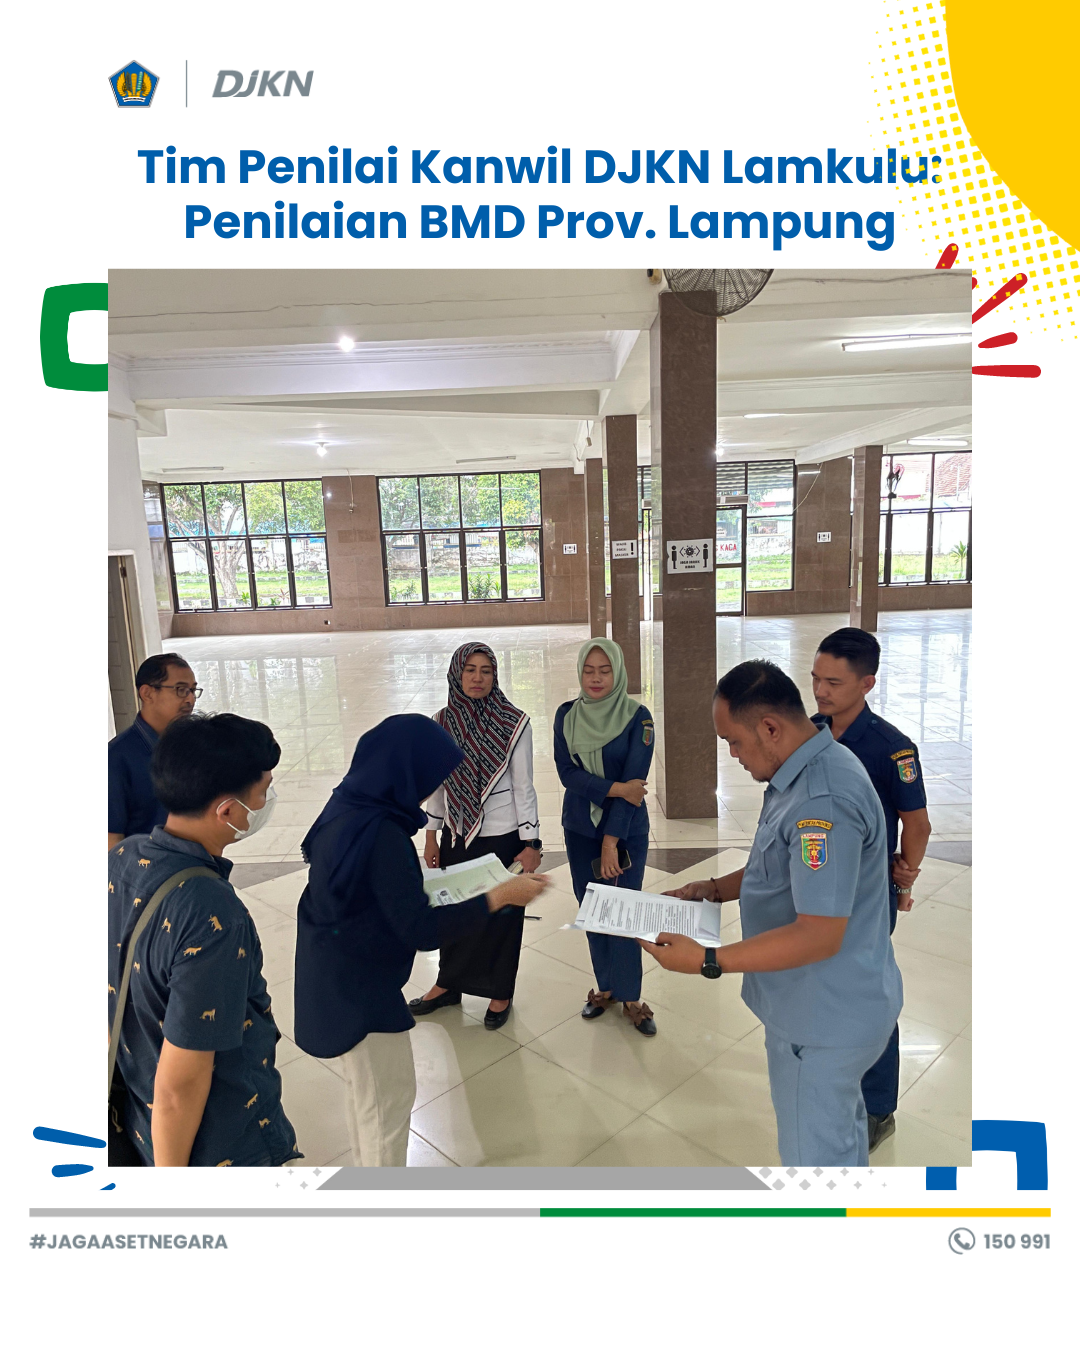 Tim Penilai Kanwil DJKN Lamkulu melakukan Penilaian BMD Provinsi Lampung